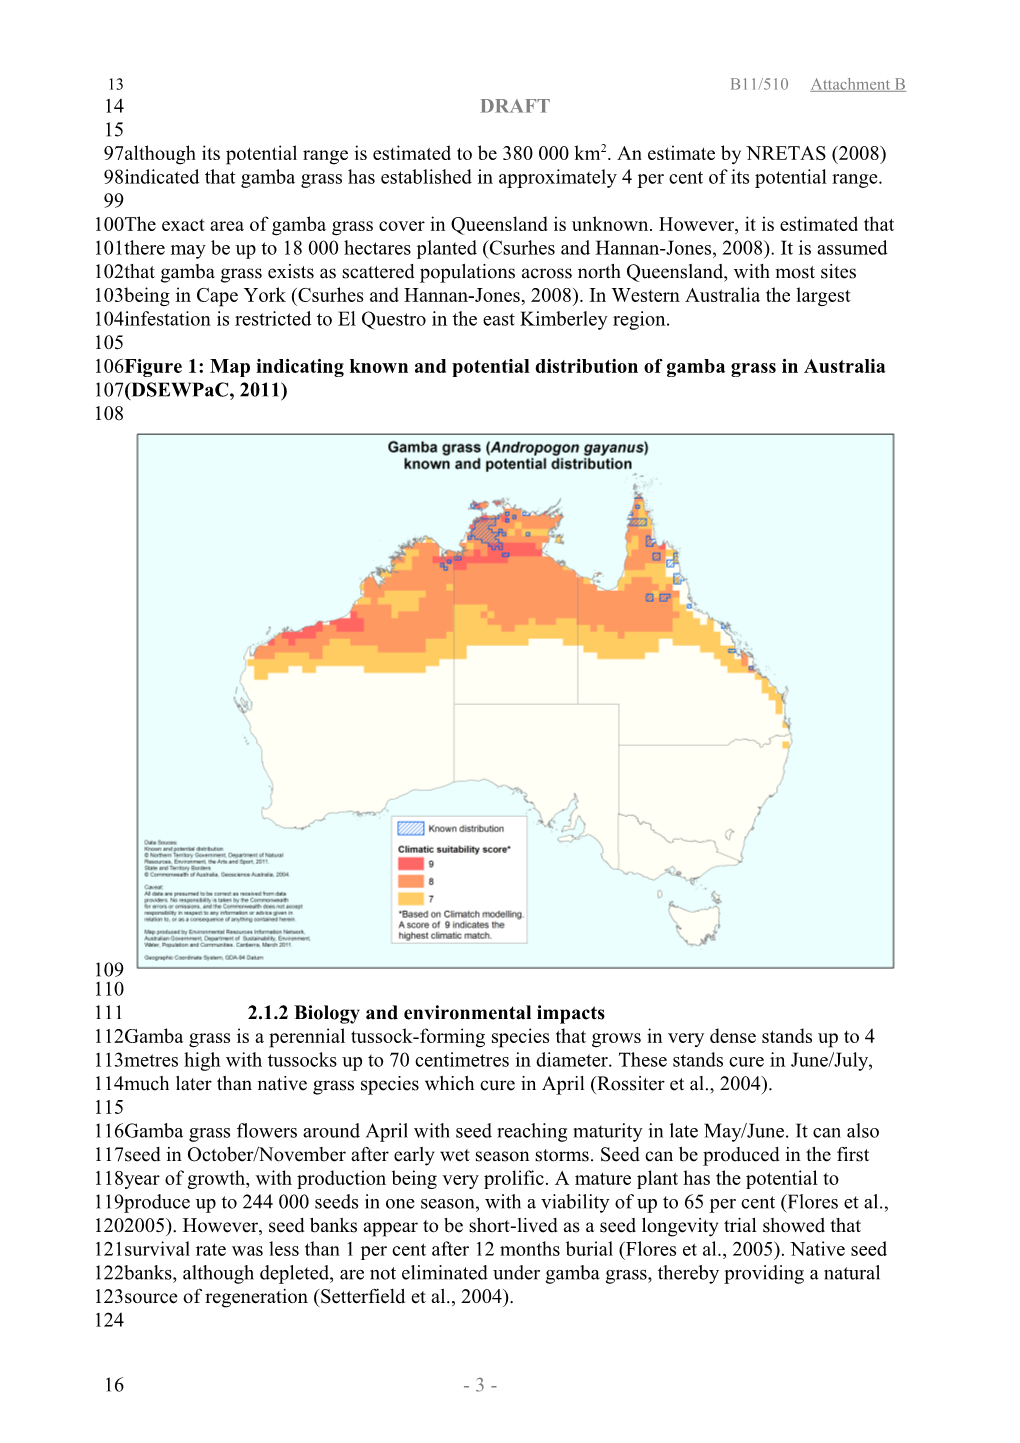 Background: Threat Abatement Plan to Reduce the Impacts on Northern Australia S Biodiversity